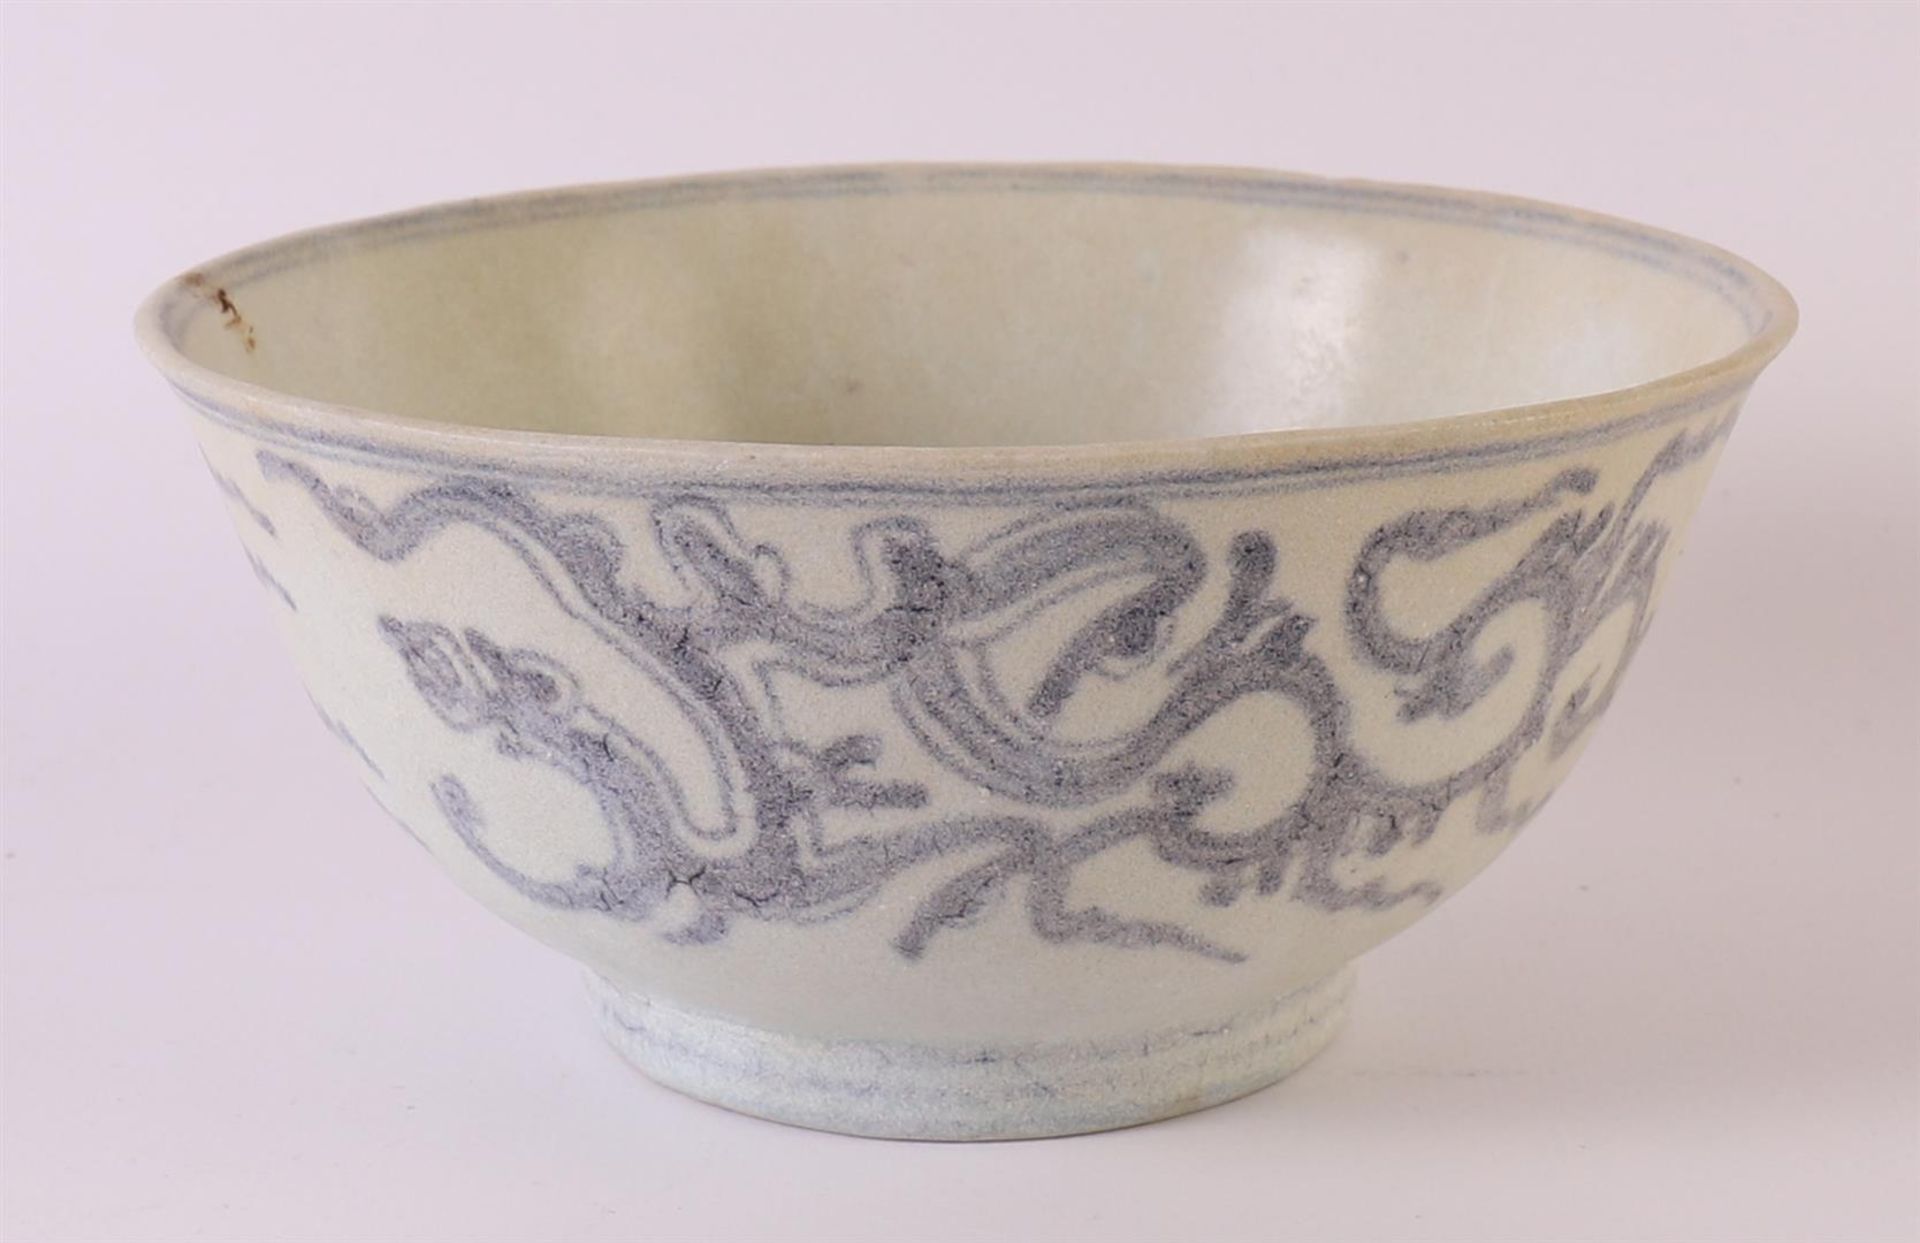 A blue/white porcelain bowl on stand ring, China, Diana Cargo, around 1800. Blue underglaze decor of